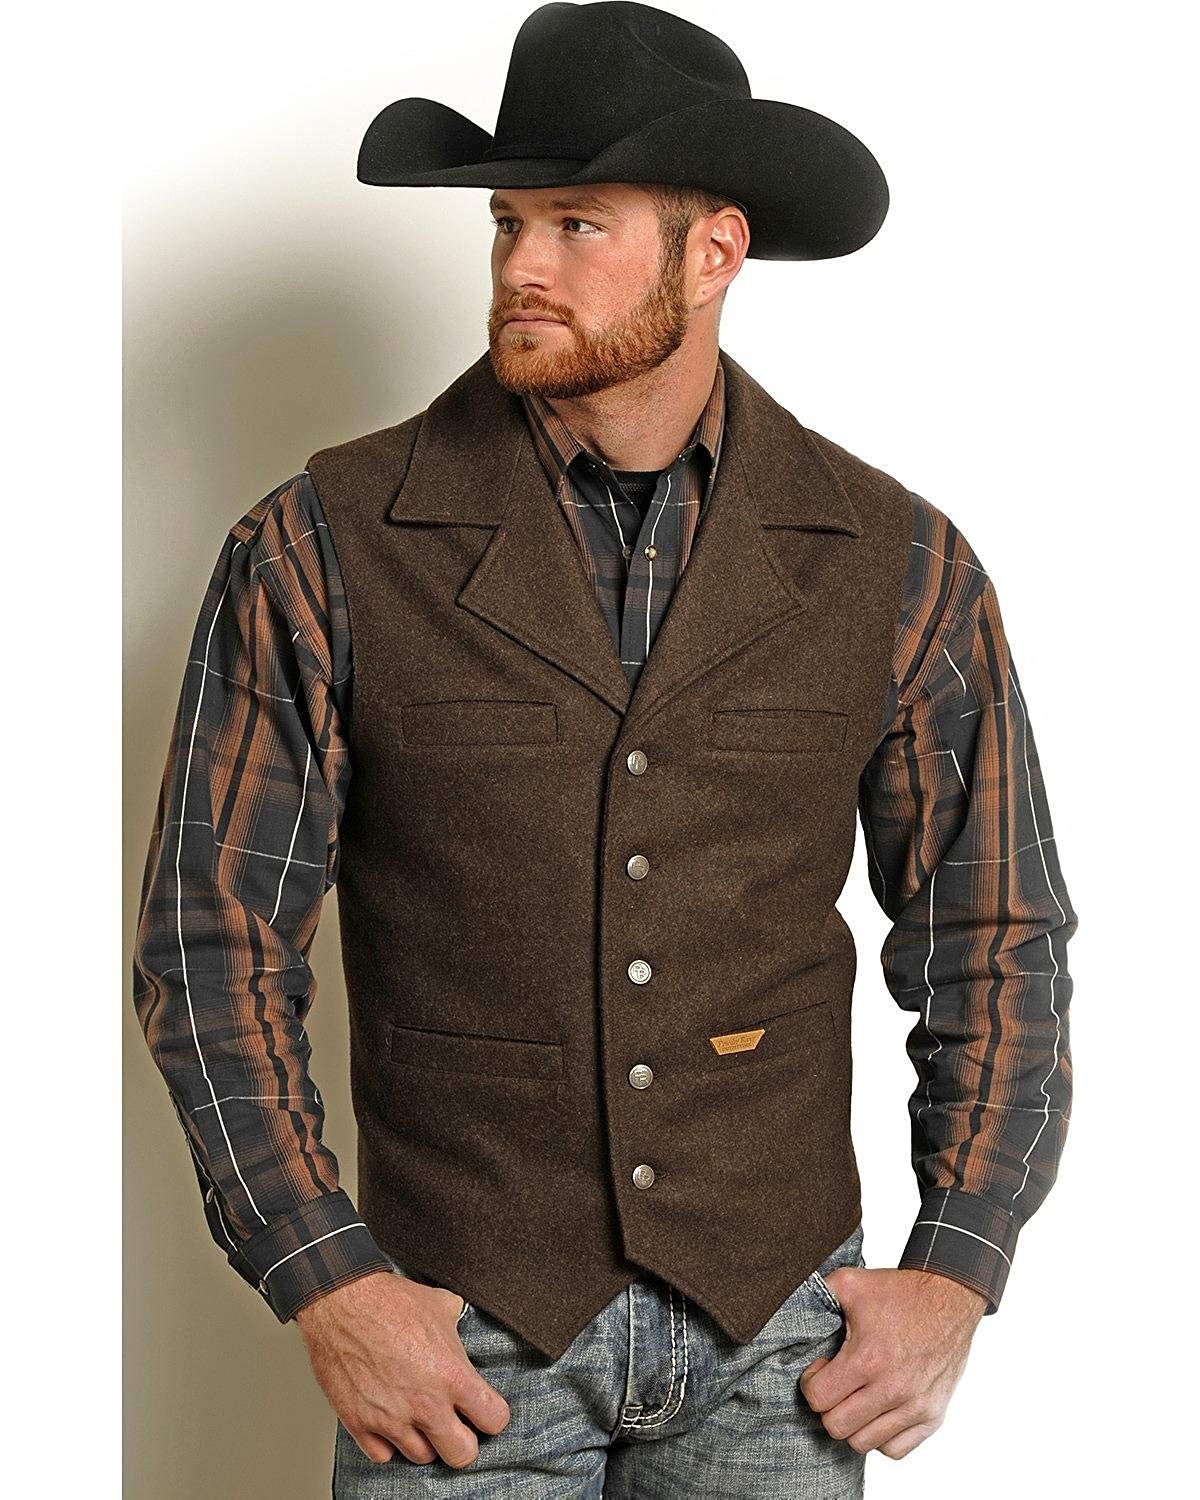 Powder River Outfitters Men's Wool Montana Vest - 98-1176-Brn | eBay